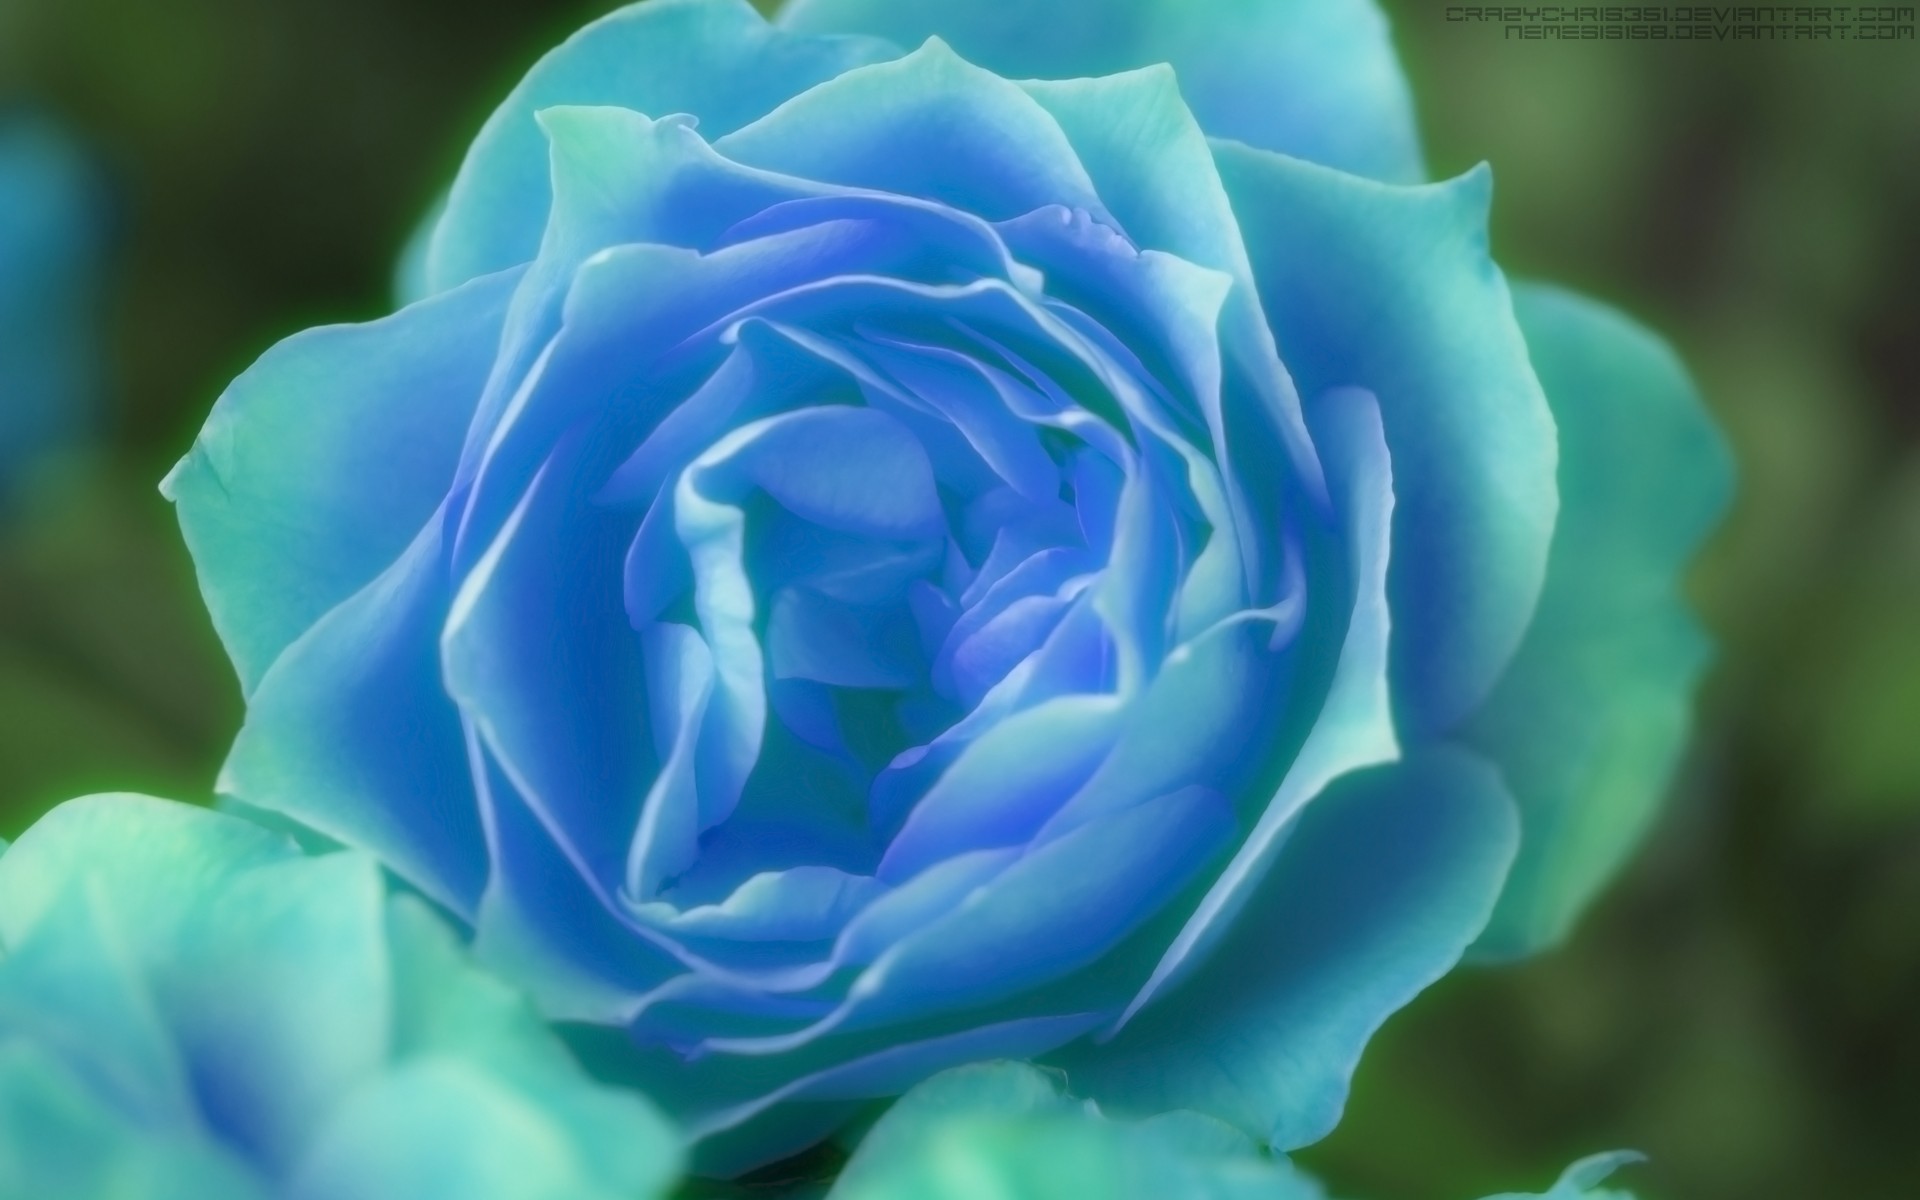 artistic, rose, blue flower, blue rose